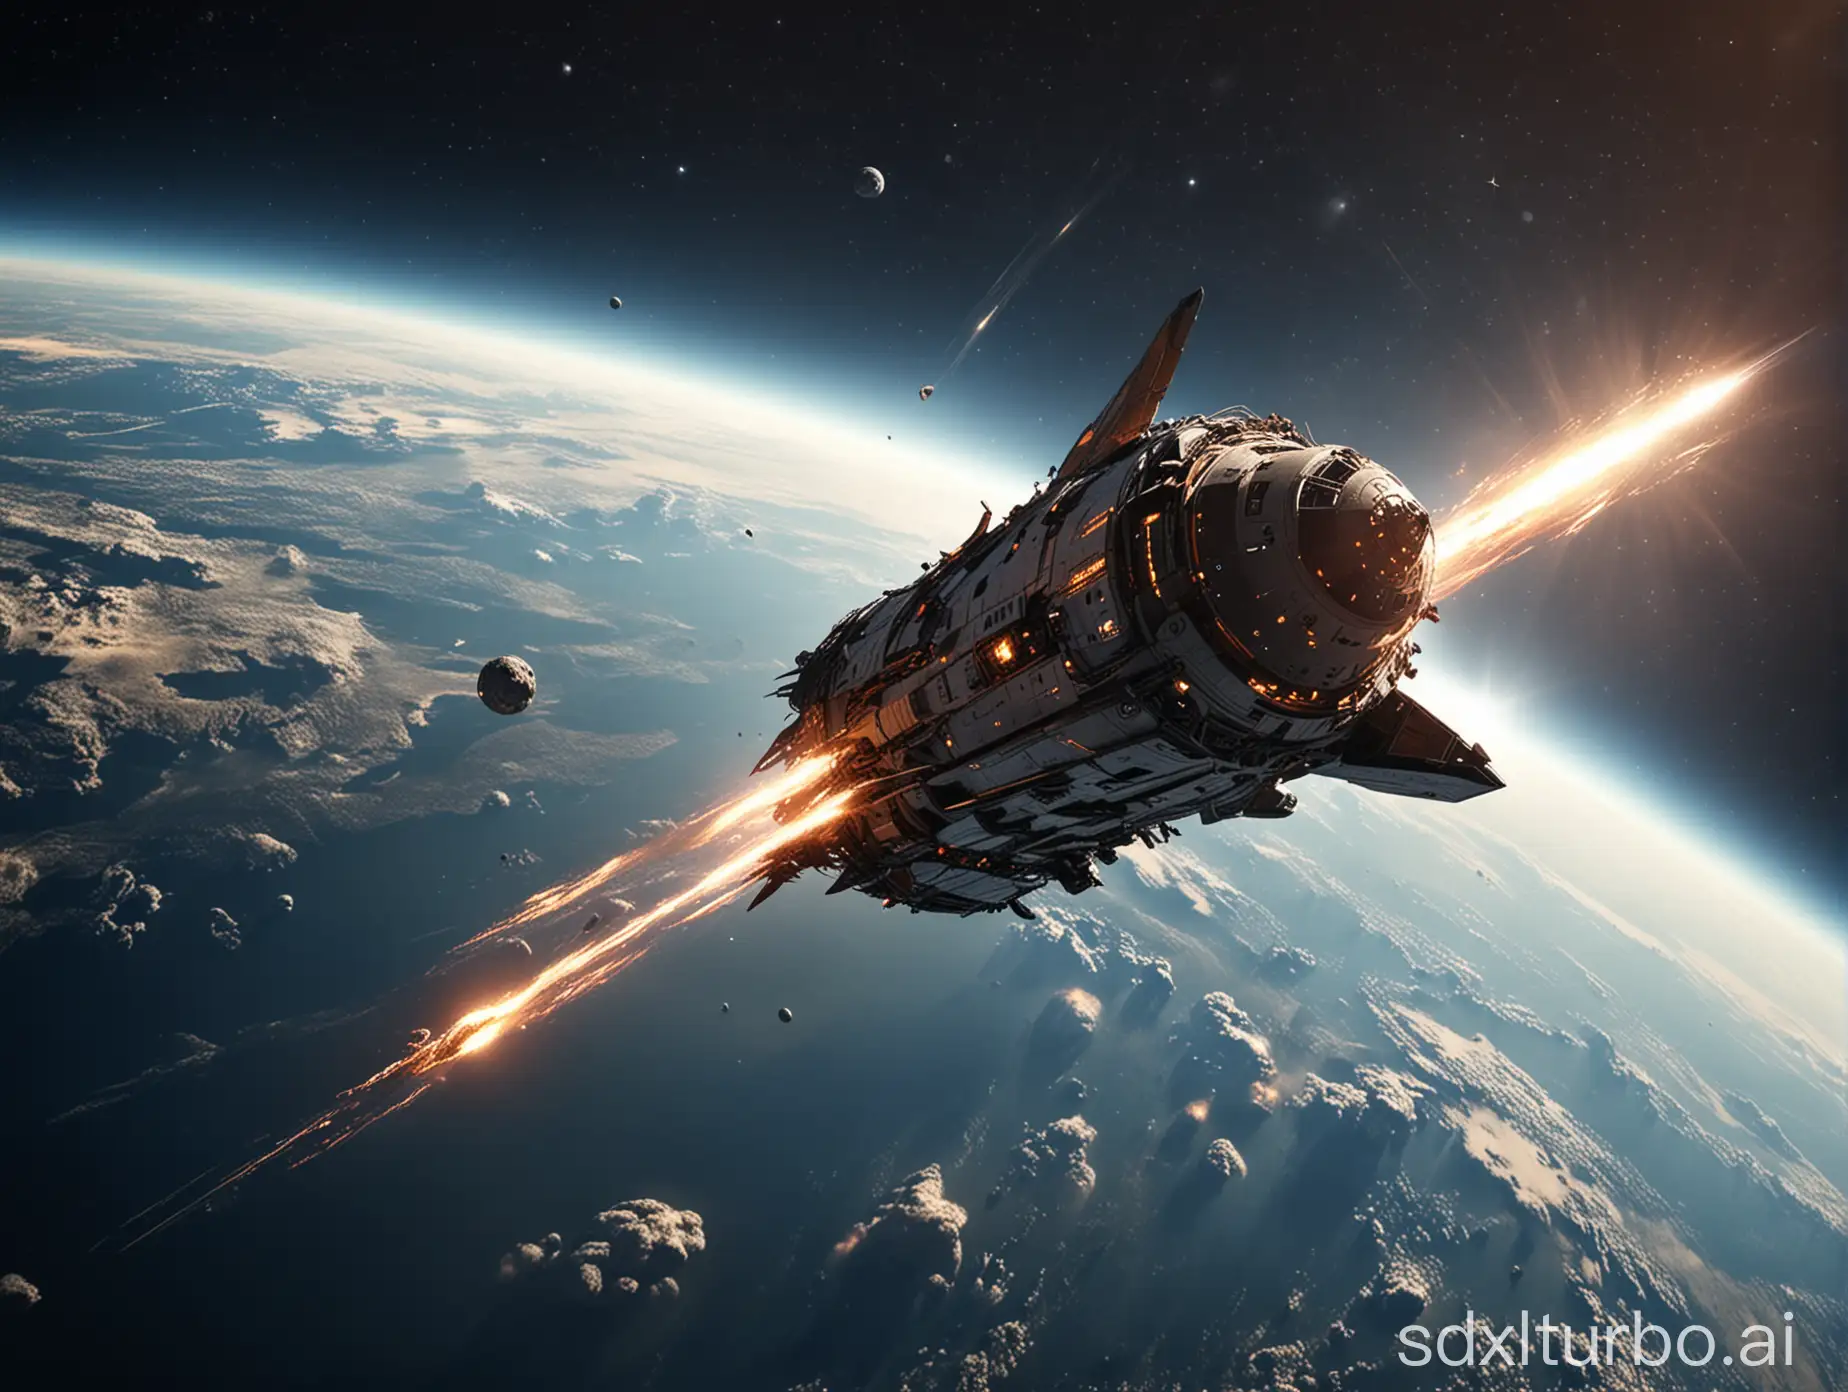 Spaceship-in-Earth-Orbit-Dodging-Meteor